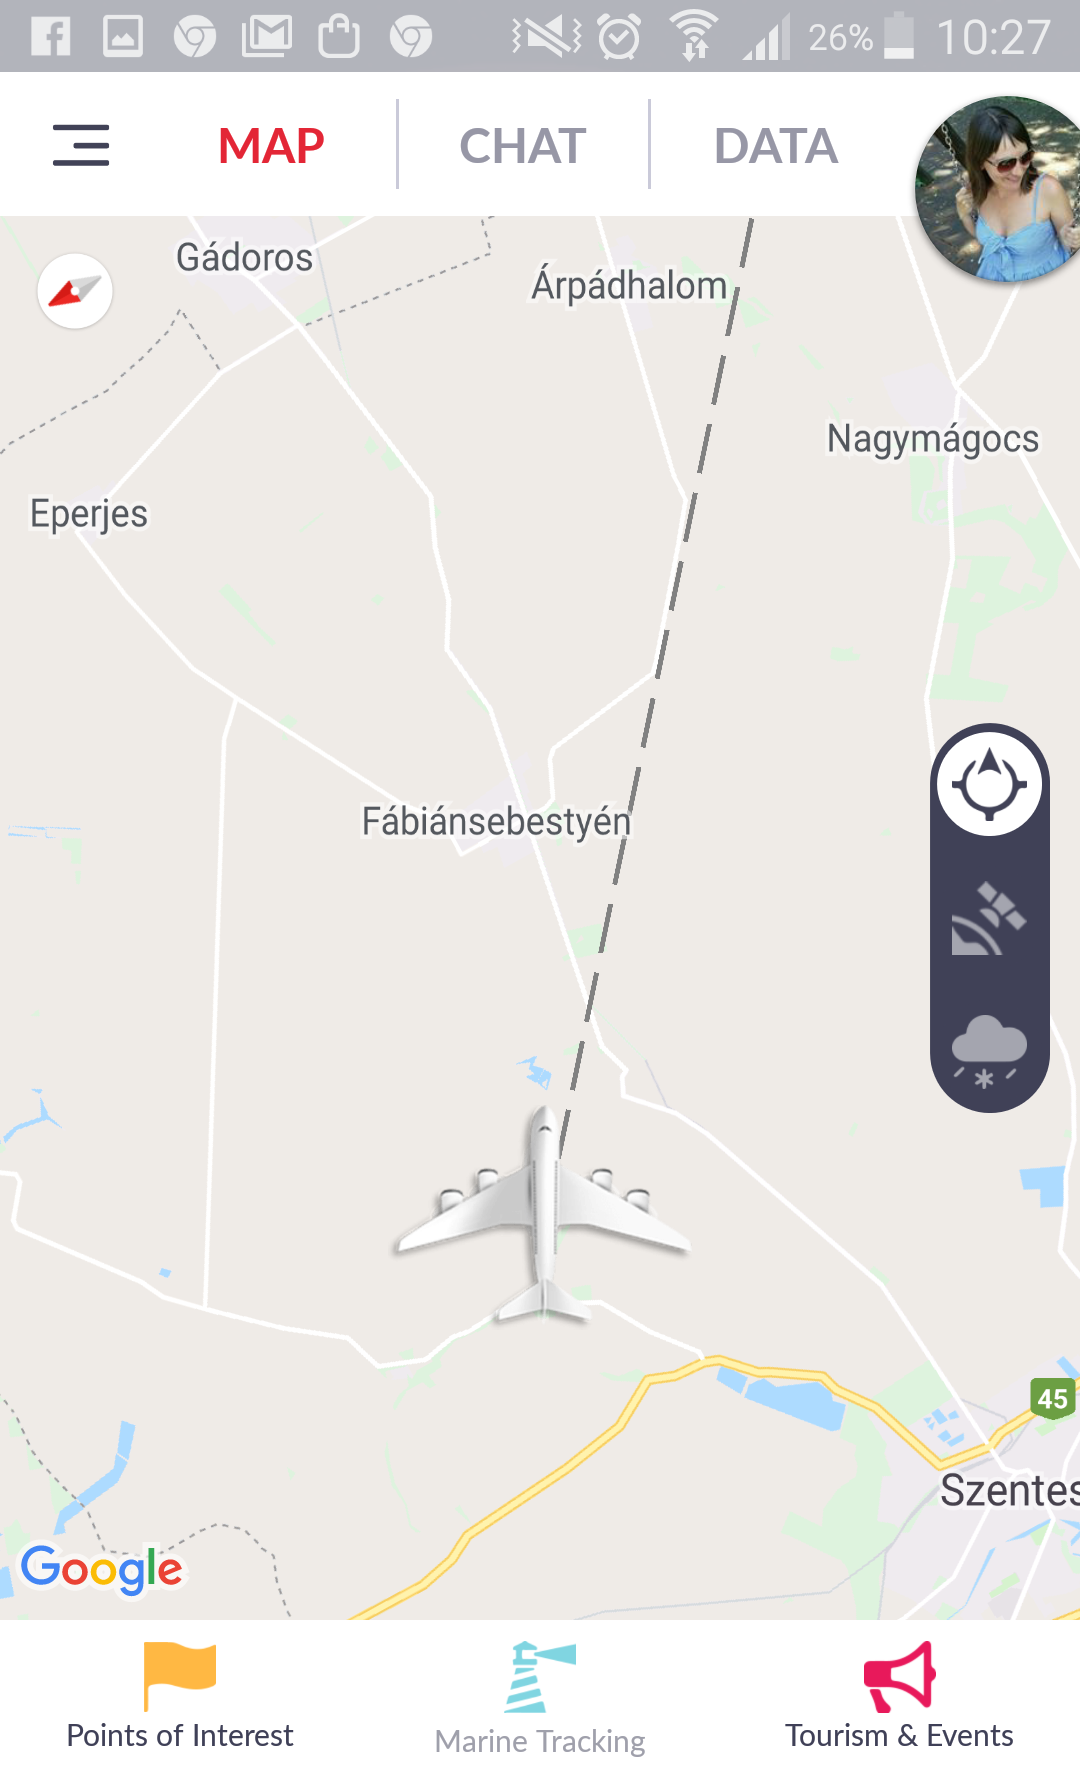 LHR-DOH flight above Hungary 